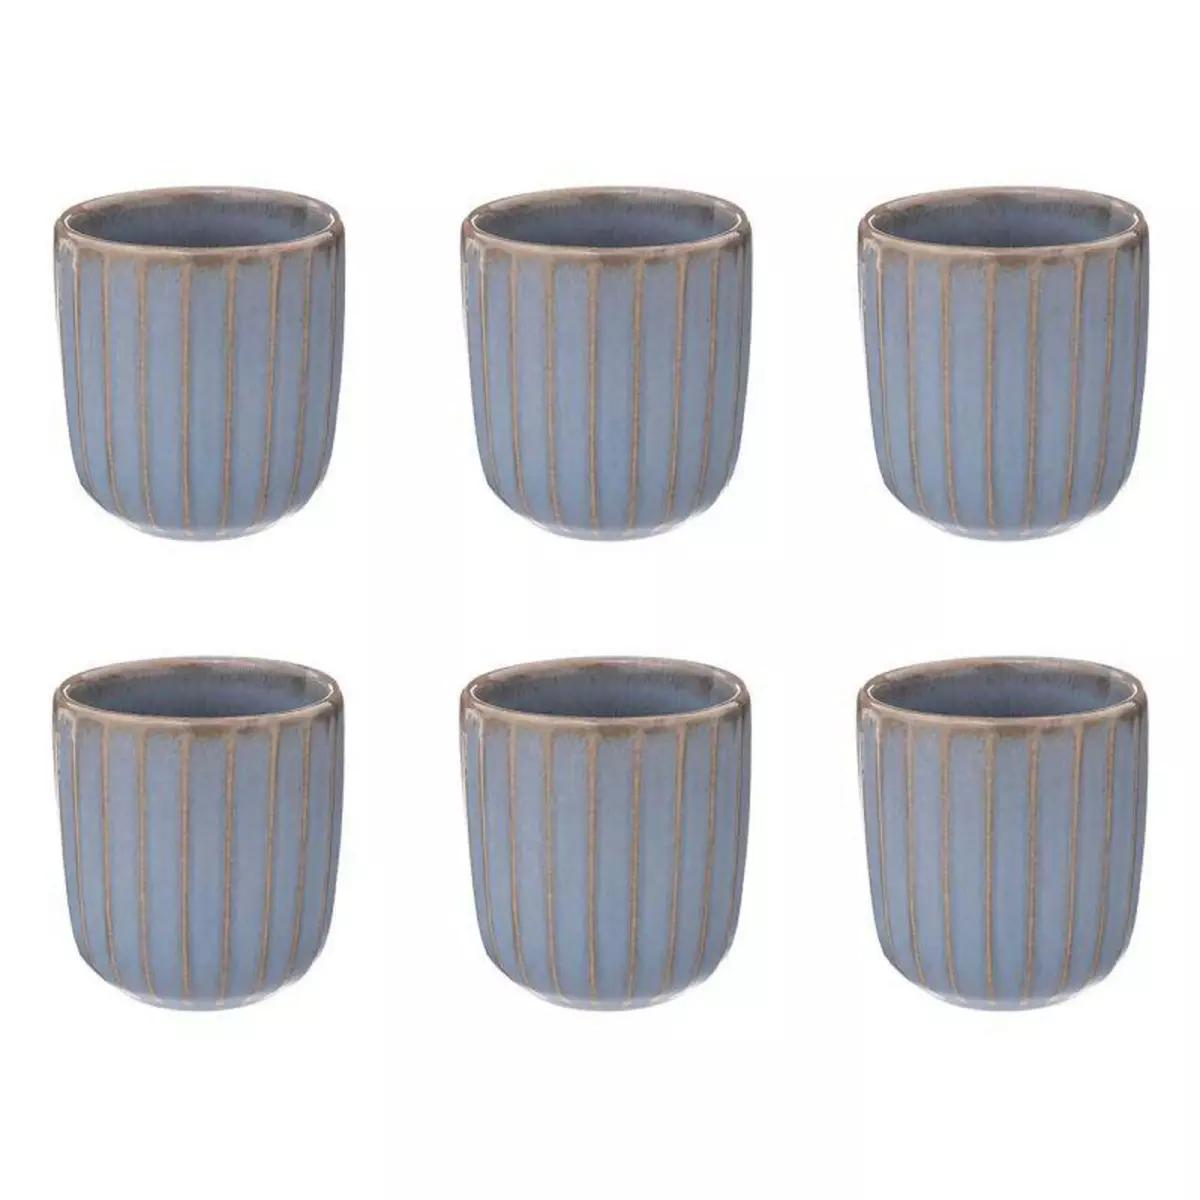  Lot de 6 Tasses à Café Design  Seav  10cl Bleu